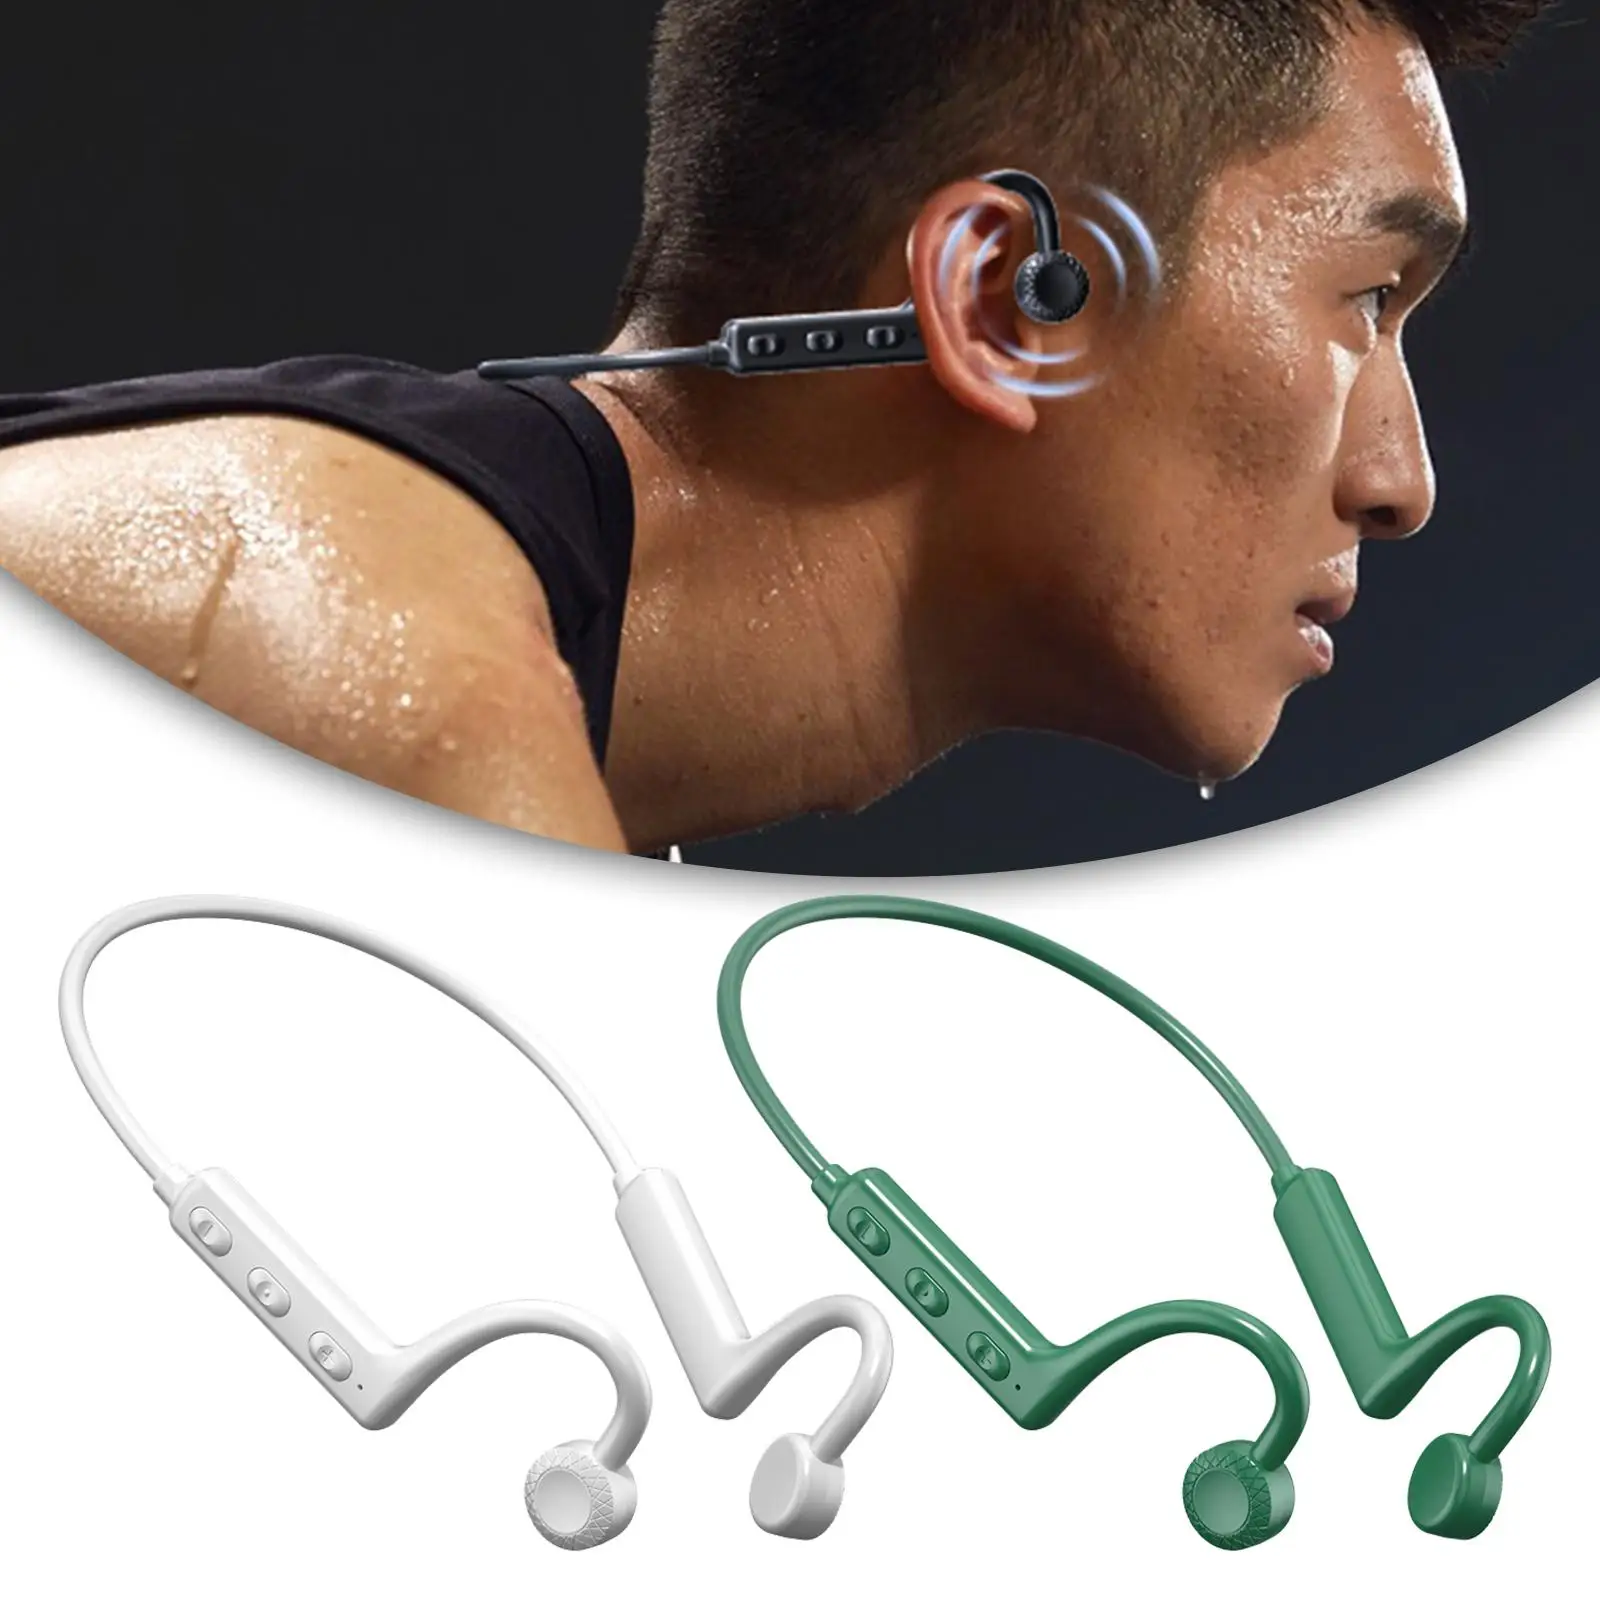 Wireless Bone Conduction Headphones Lightweight IPX5 Waterproof with Mic Open Ear Headset for Running Sports Hiking Workout